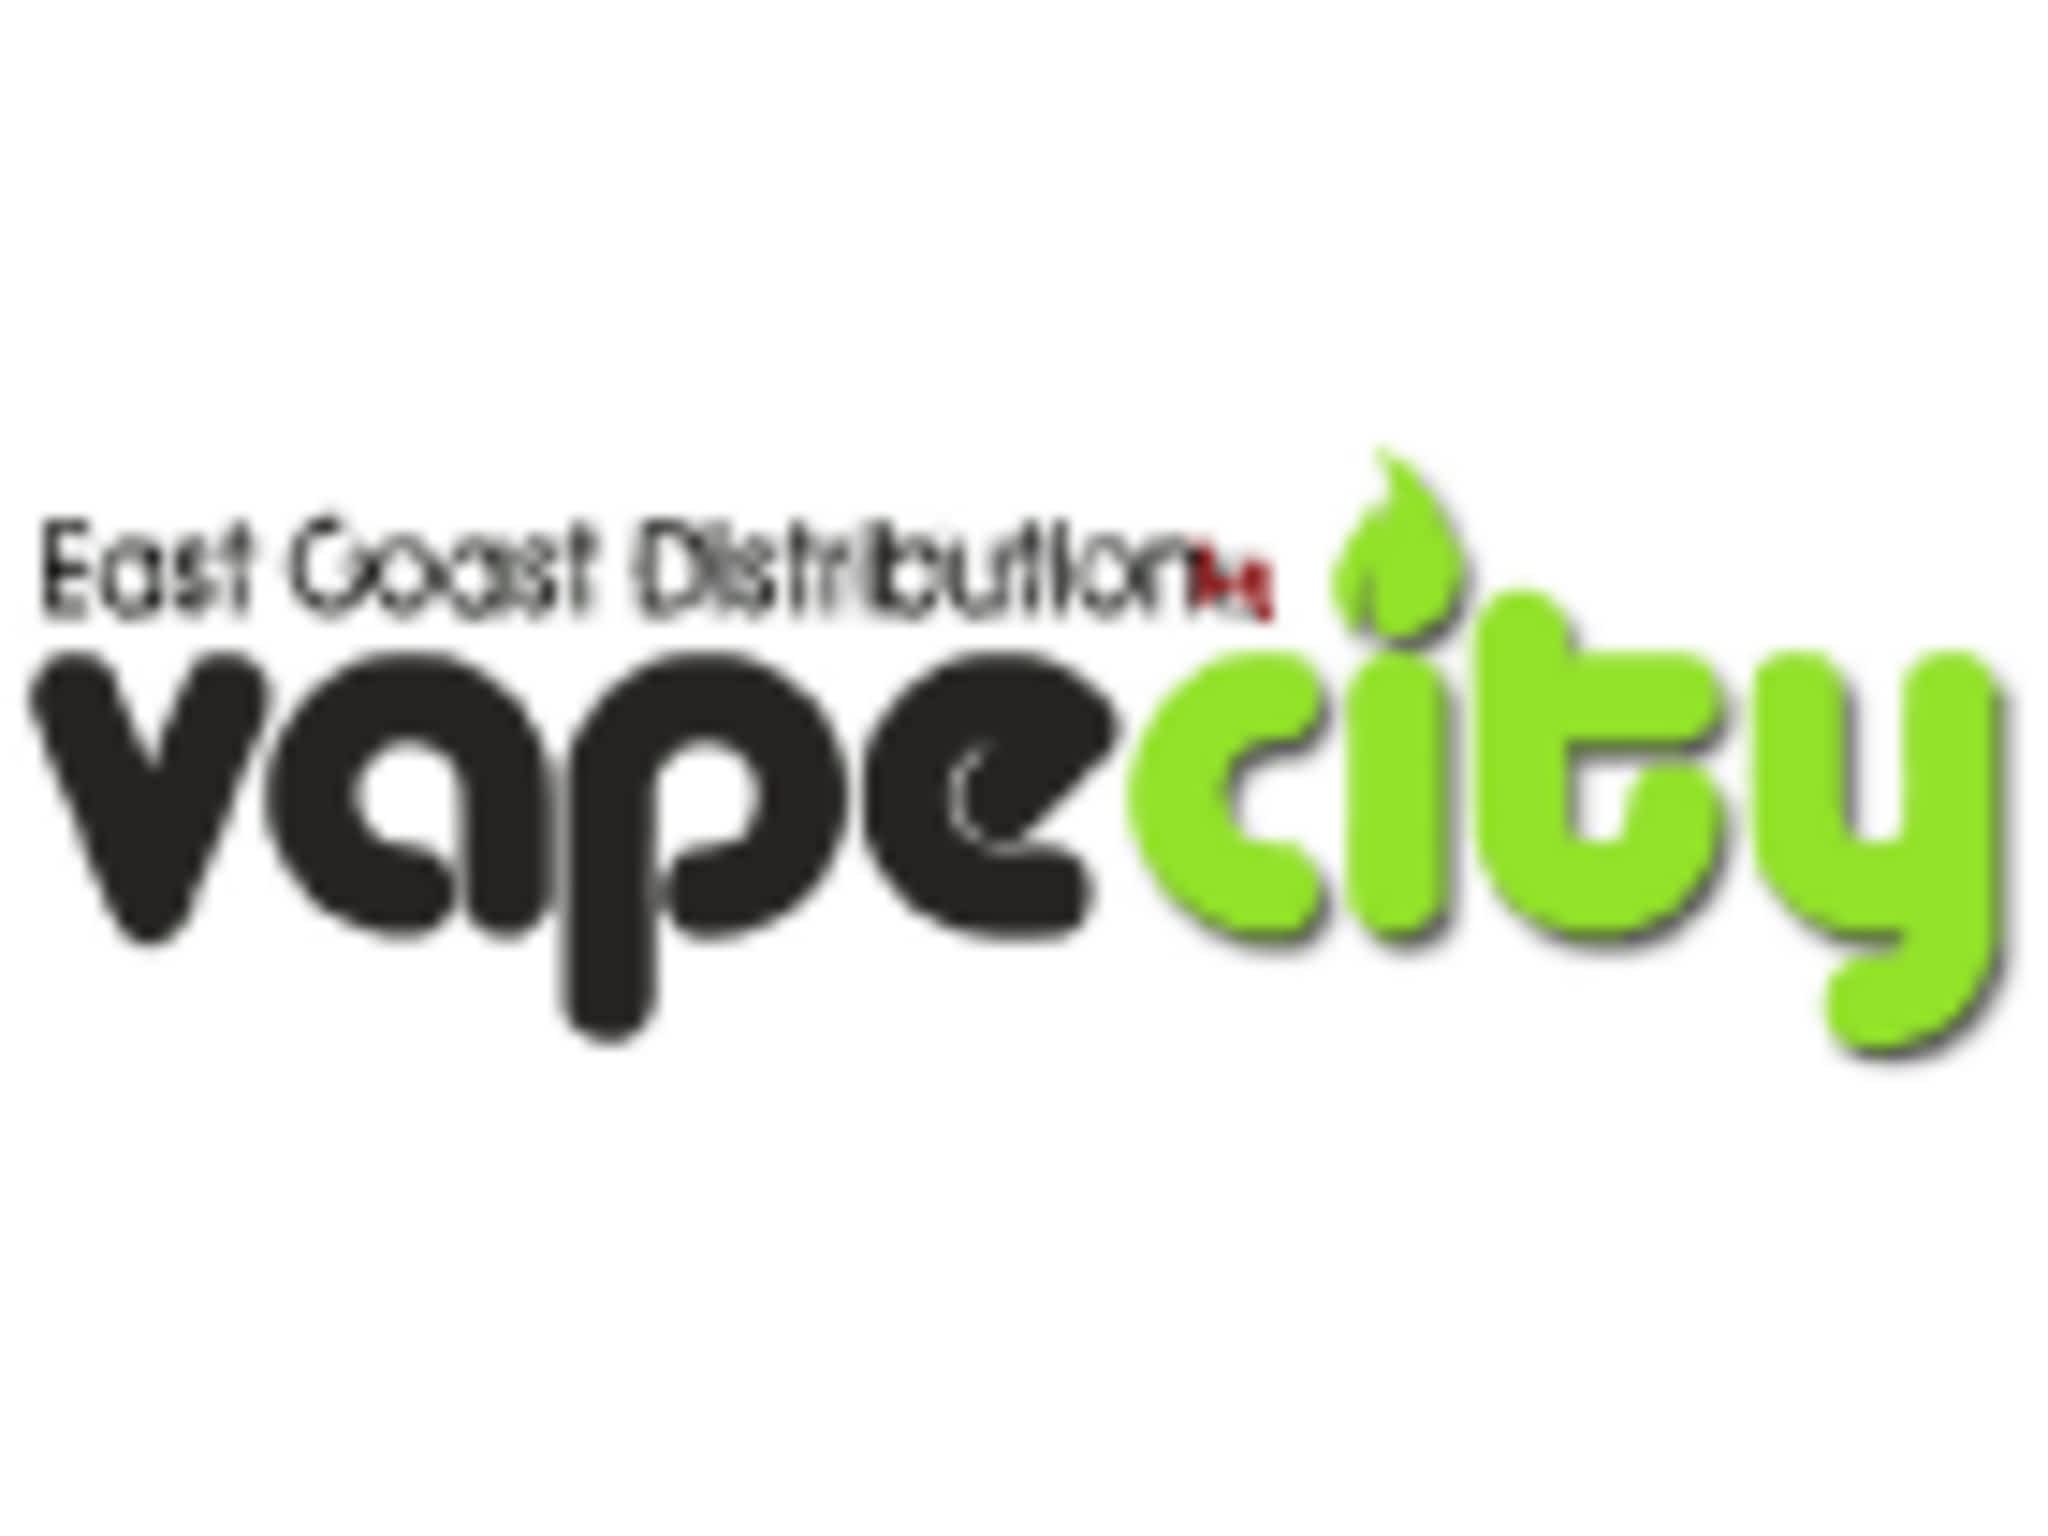 photo East Coast Distribution - VapeCity